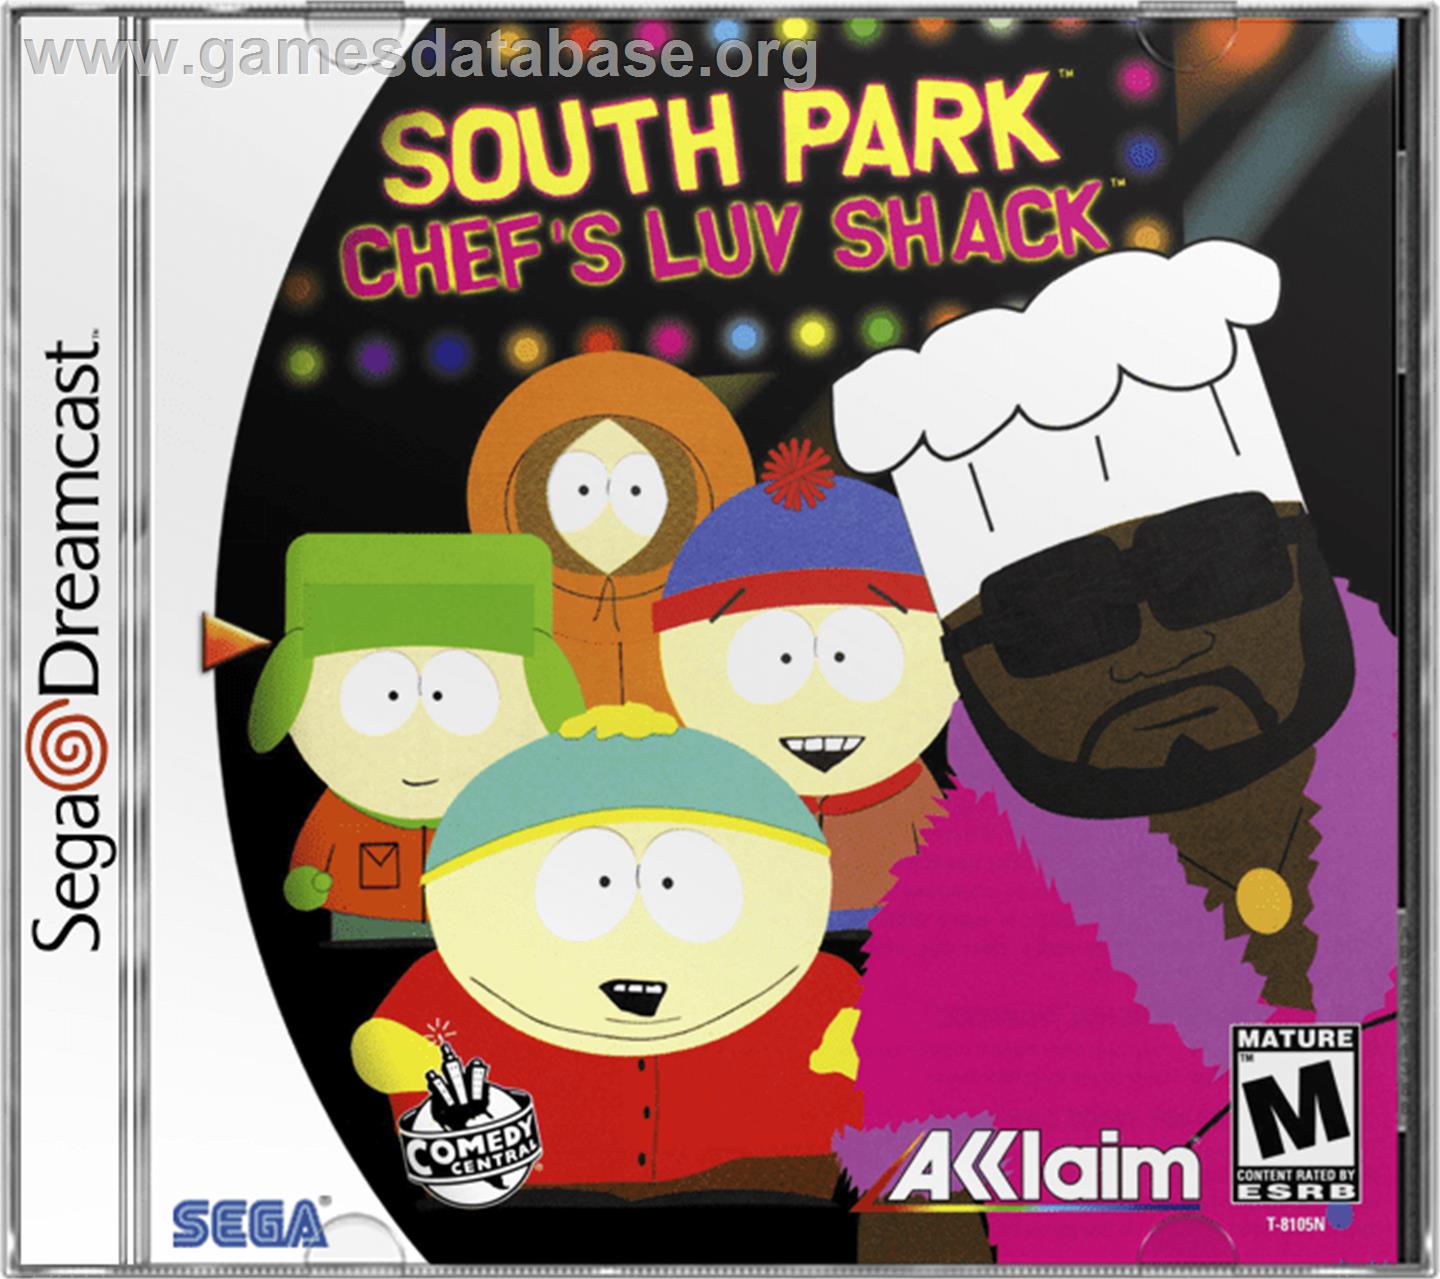 South Park: Chef's Luv Shack - Sega Dreamcast - Artwork - Box